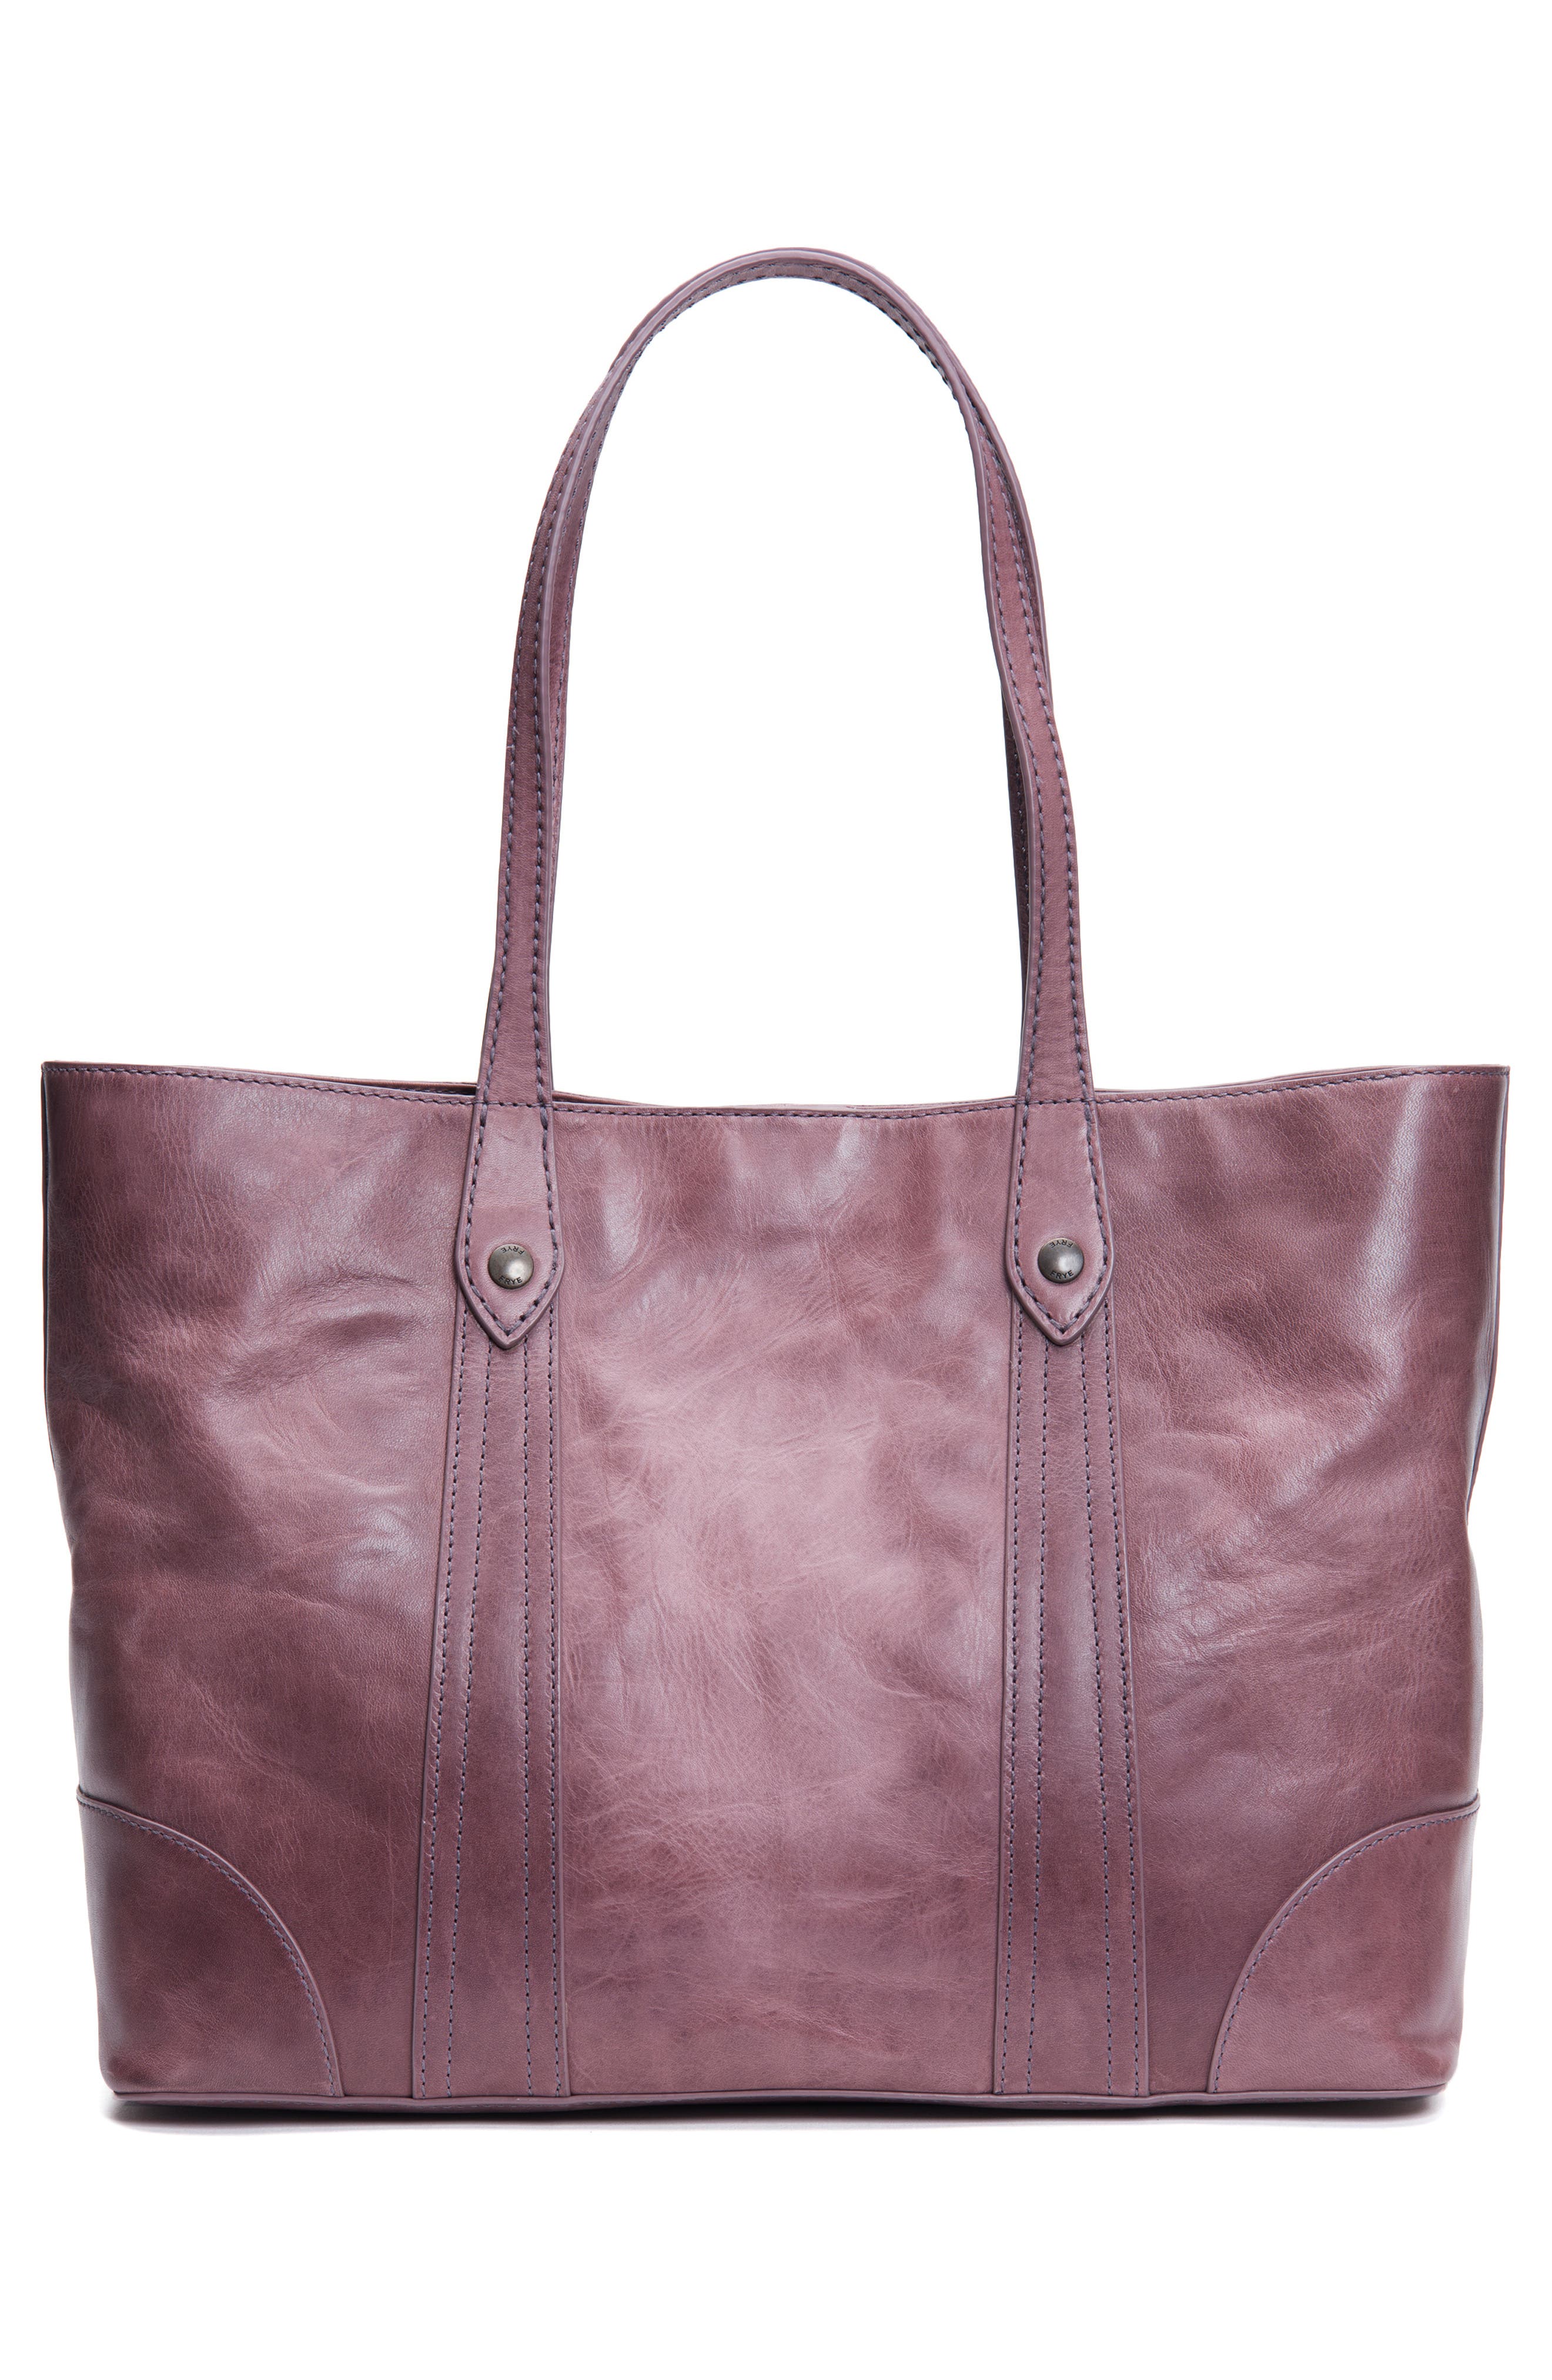 frye melissa shopper tote leather handbag